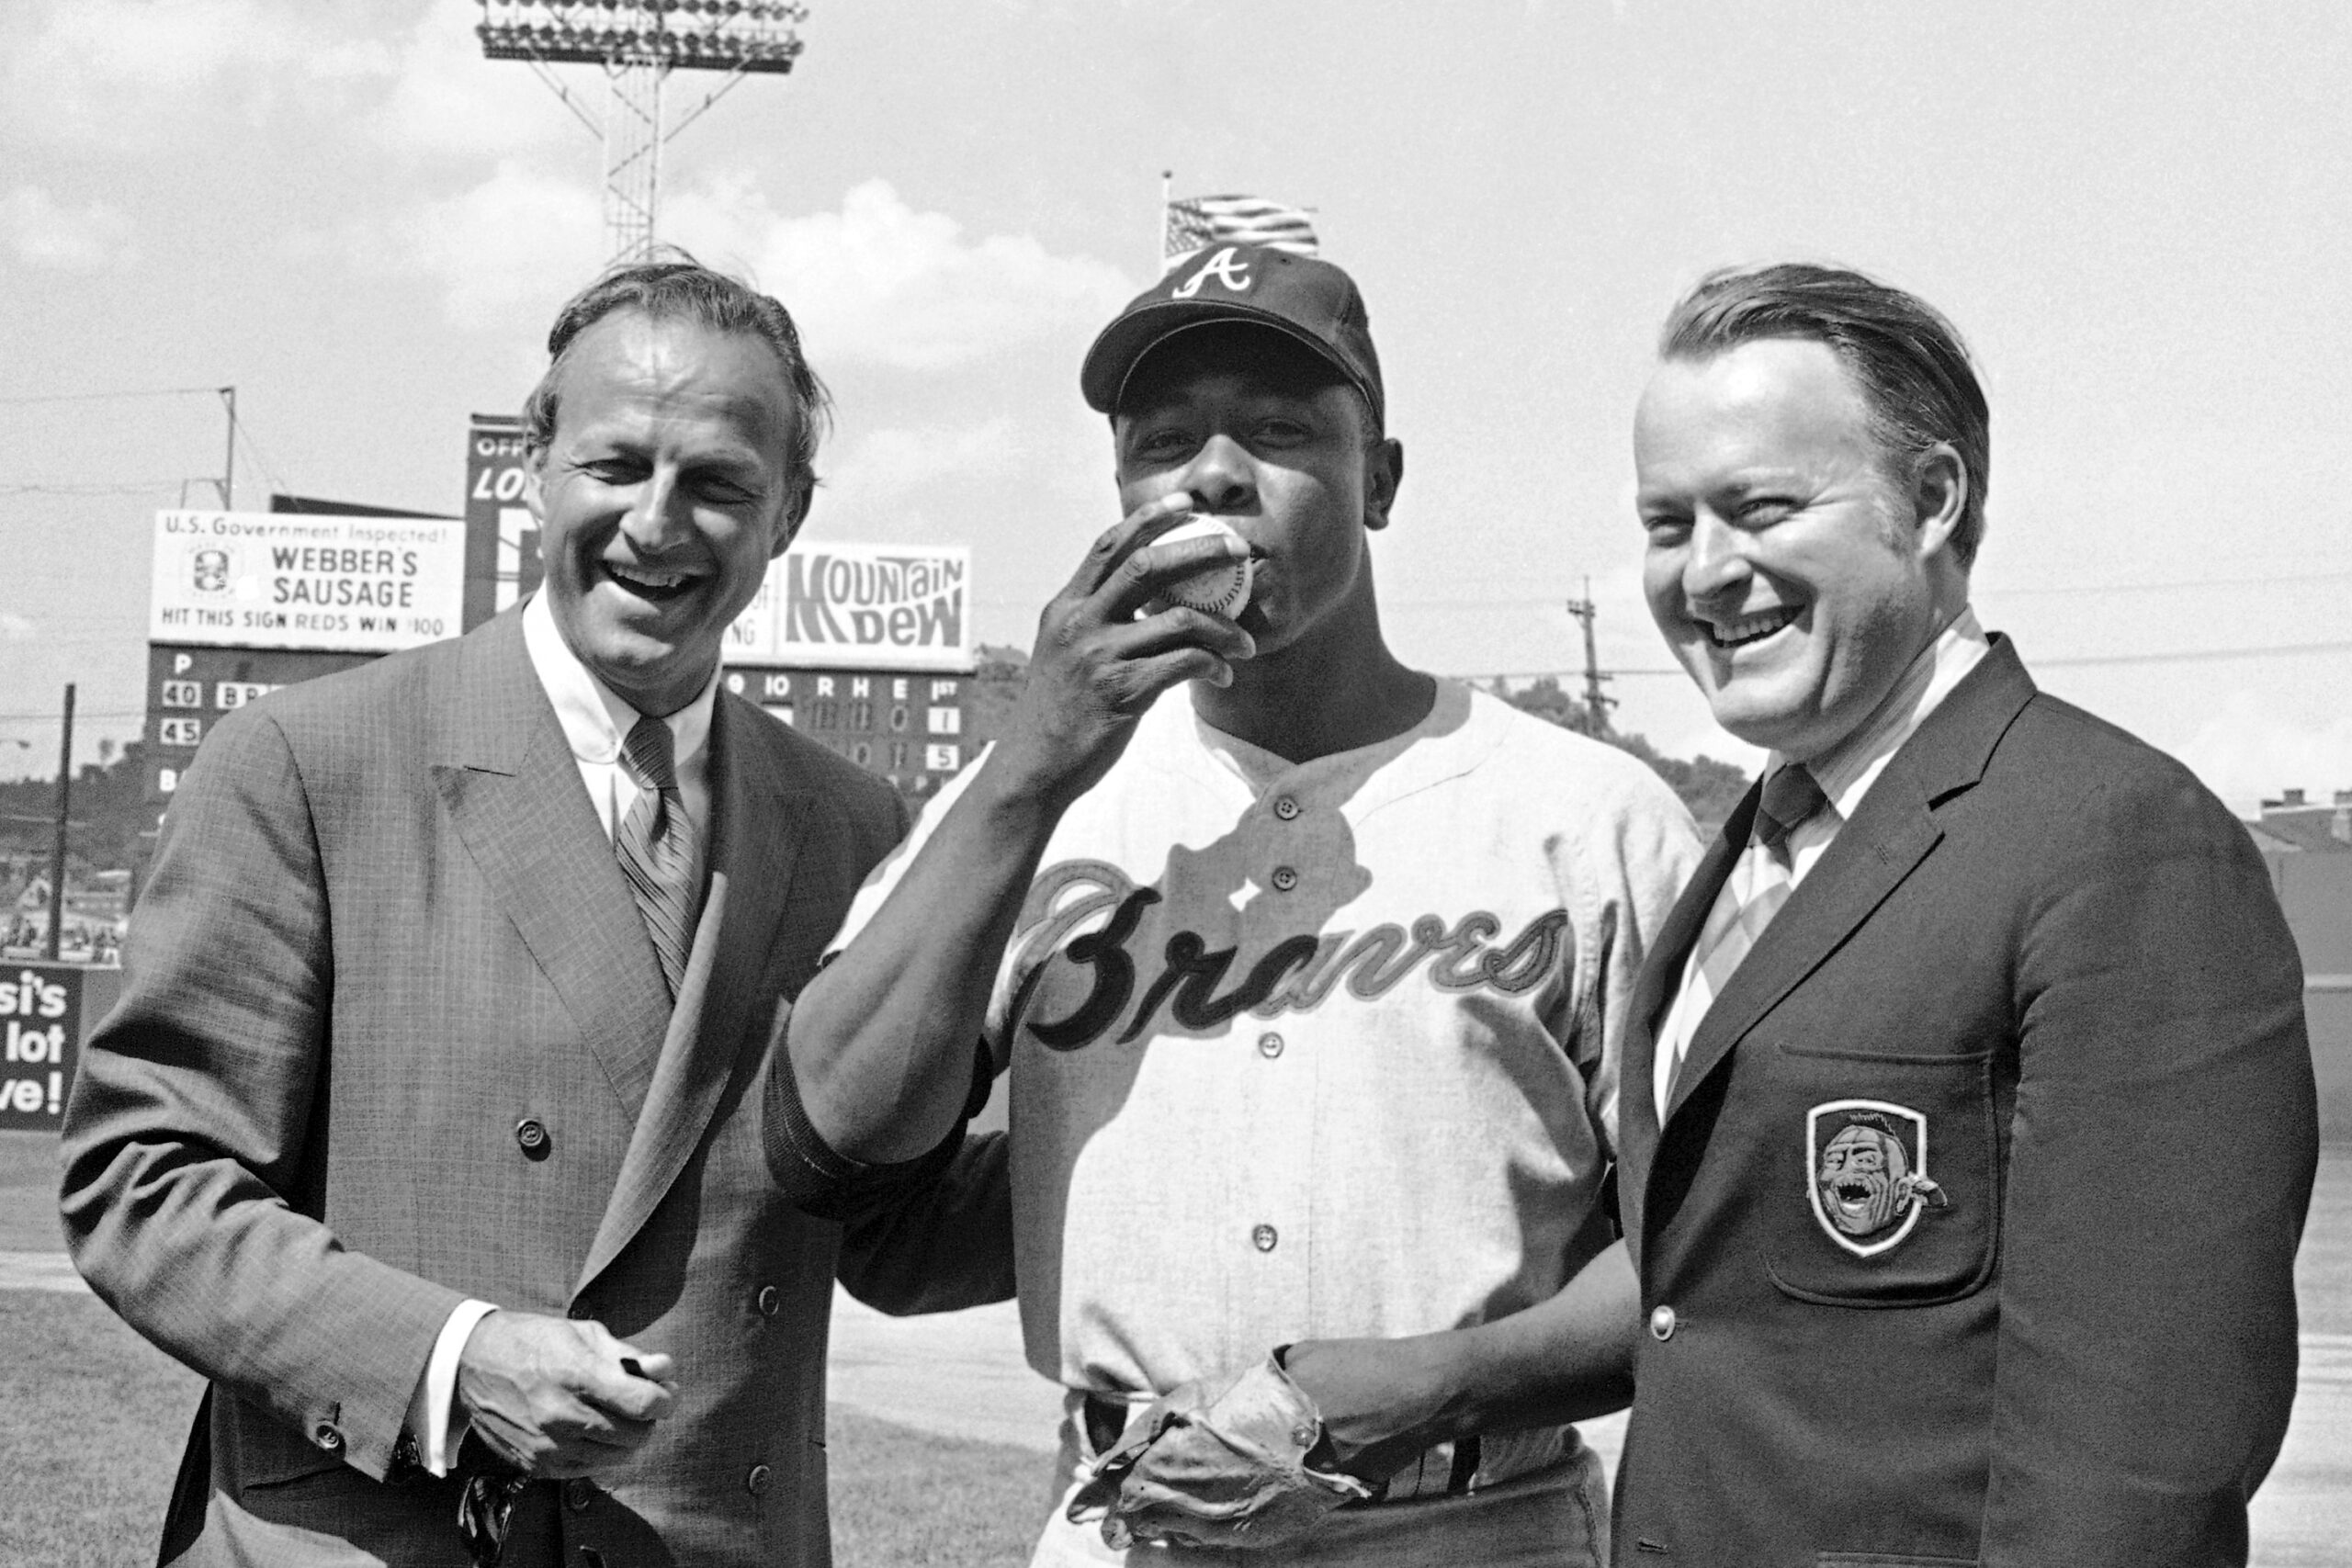 Hank Aaron obituary, Baseball